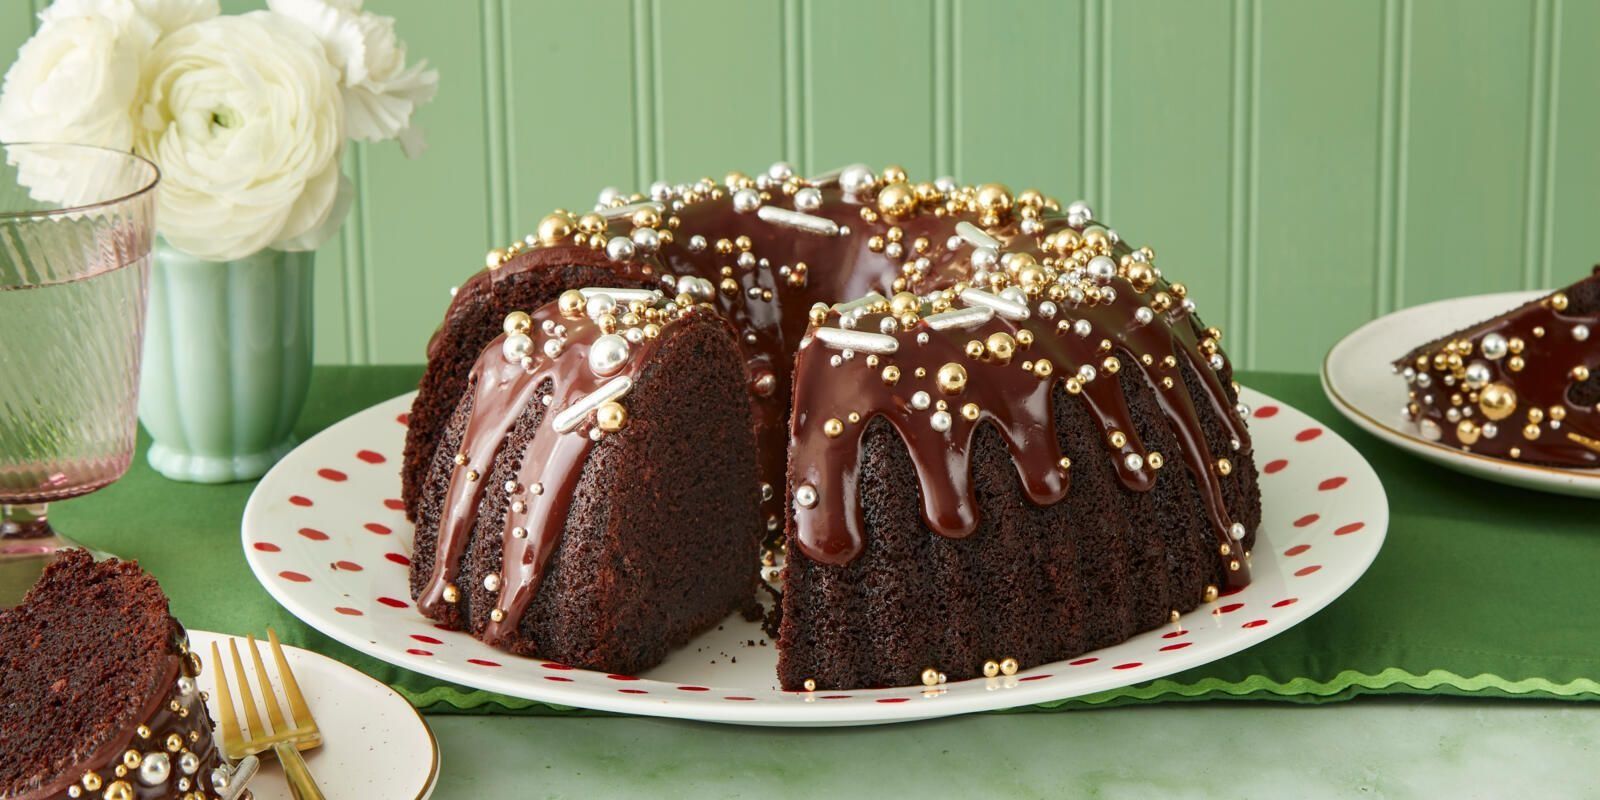 Vanilla Cake Recipe {From Scratch Homemade Cake with Whipped Eggs} | Recipe  | Best vanilla cake recipe, Homemade vanilla cake, Cake recipes from scratch